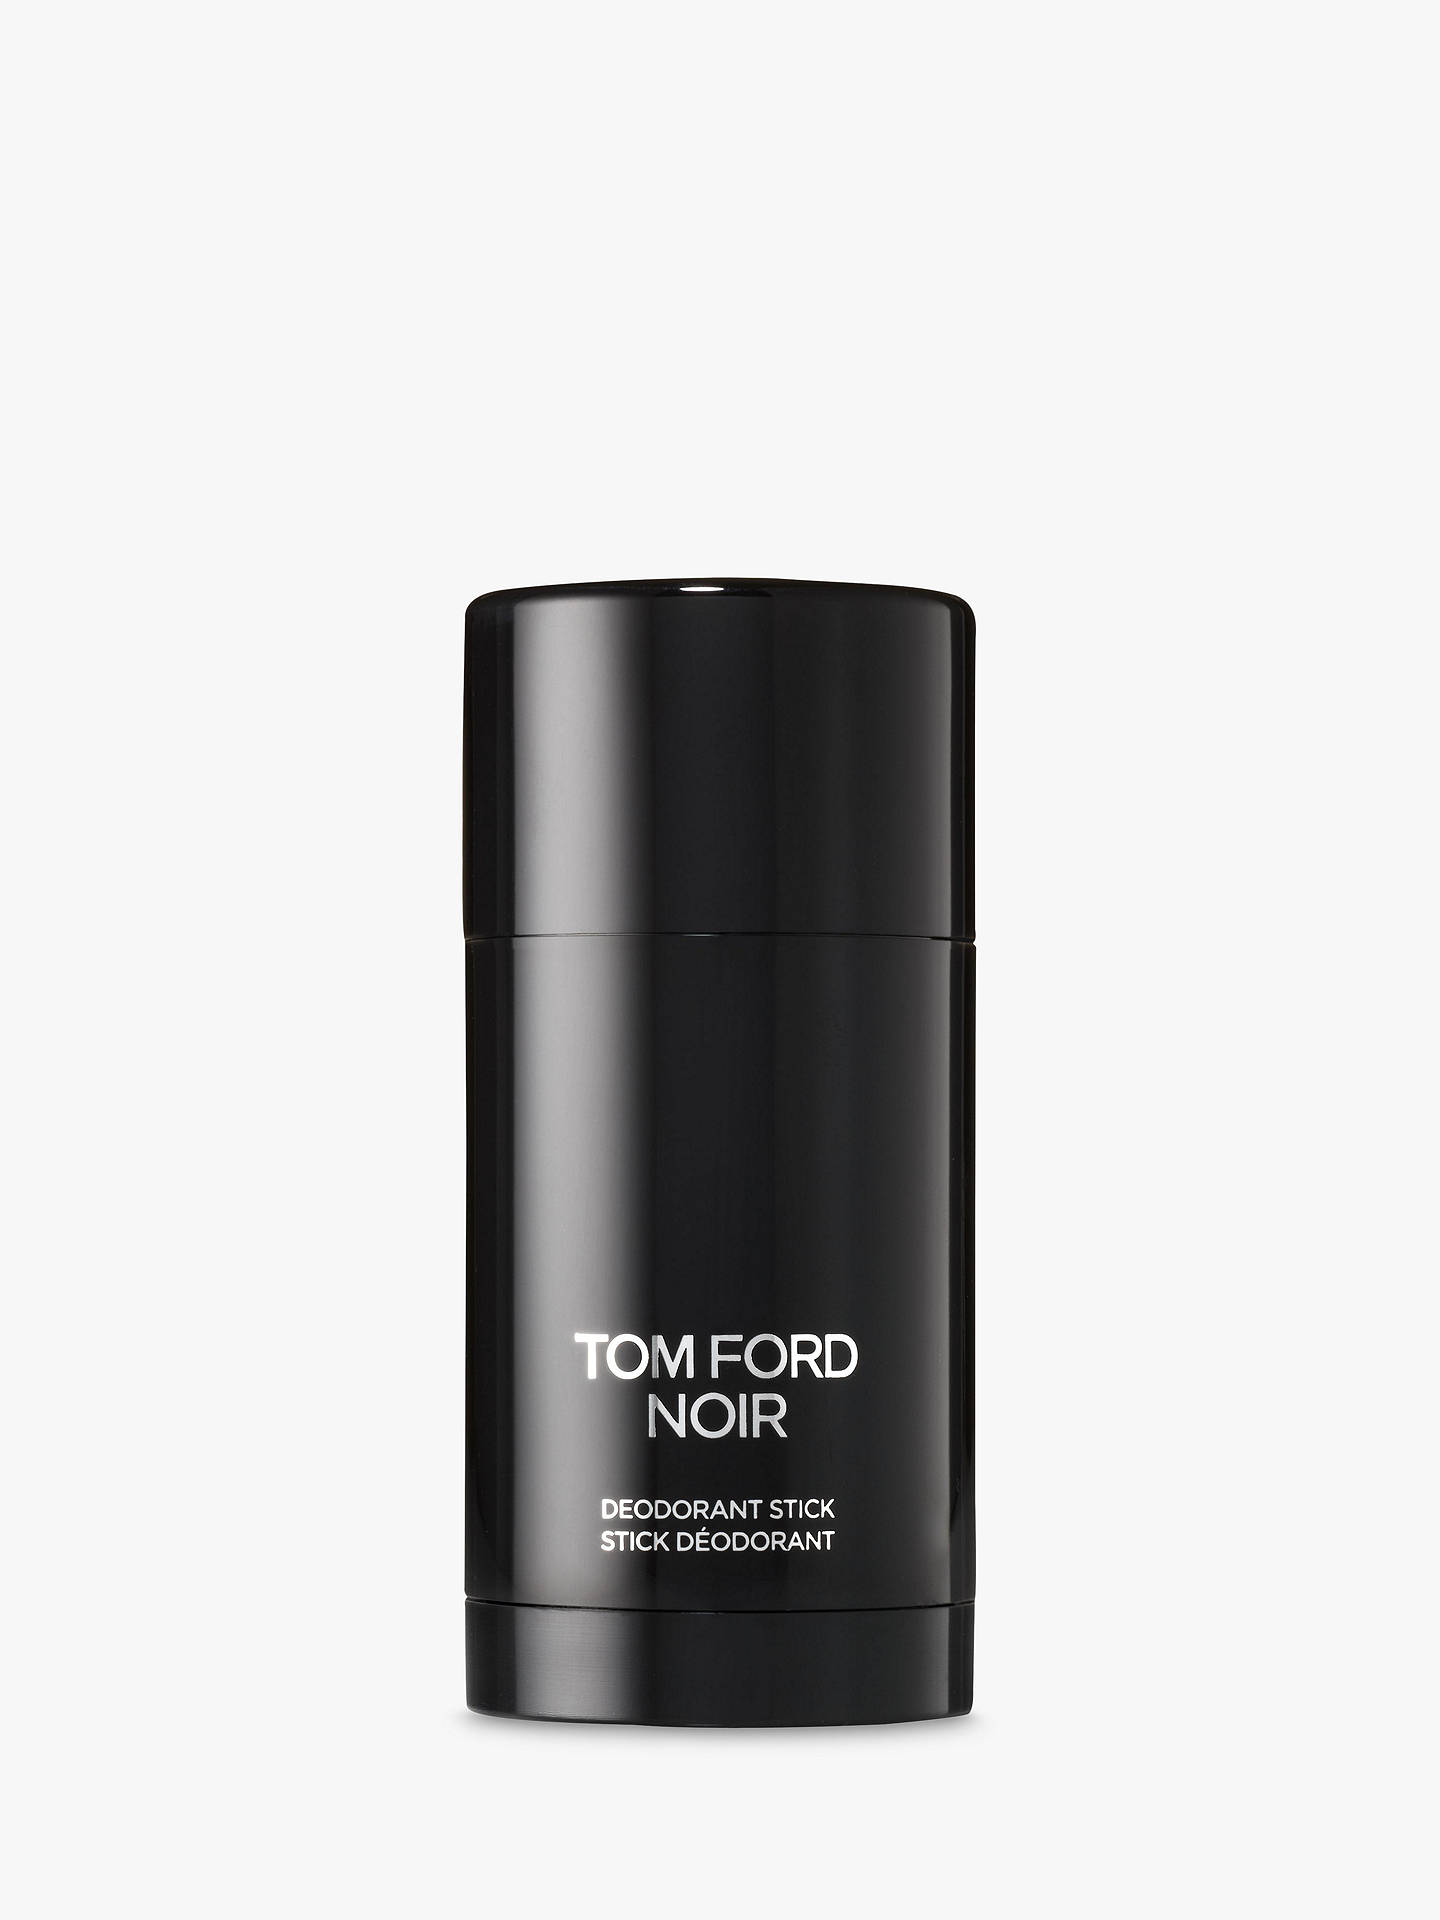 TOM FORD Noir Deodorant, 75ml at John Lewis & Partners